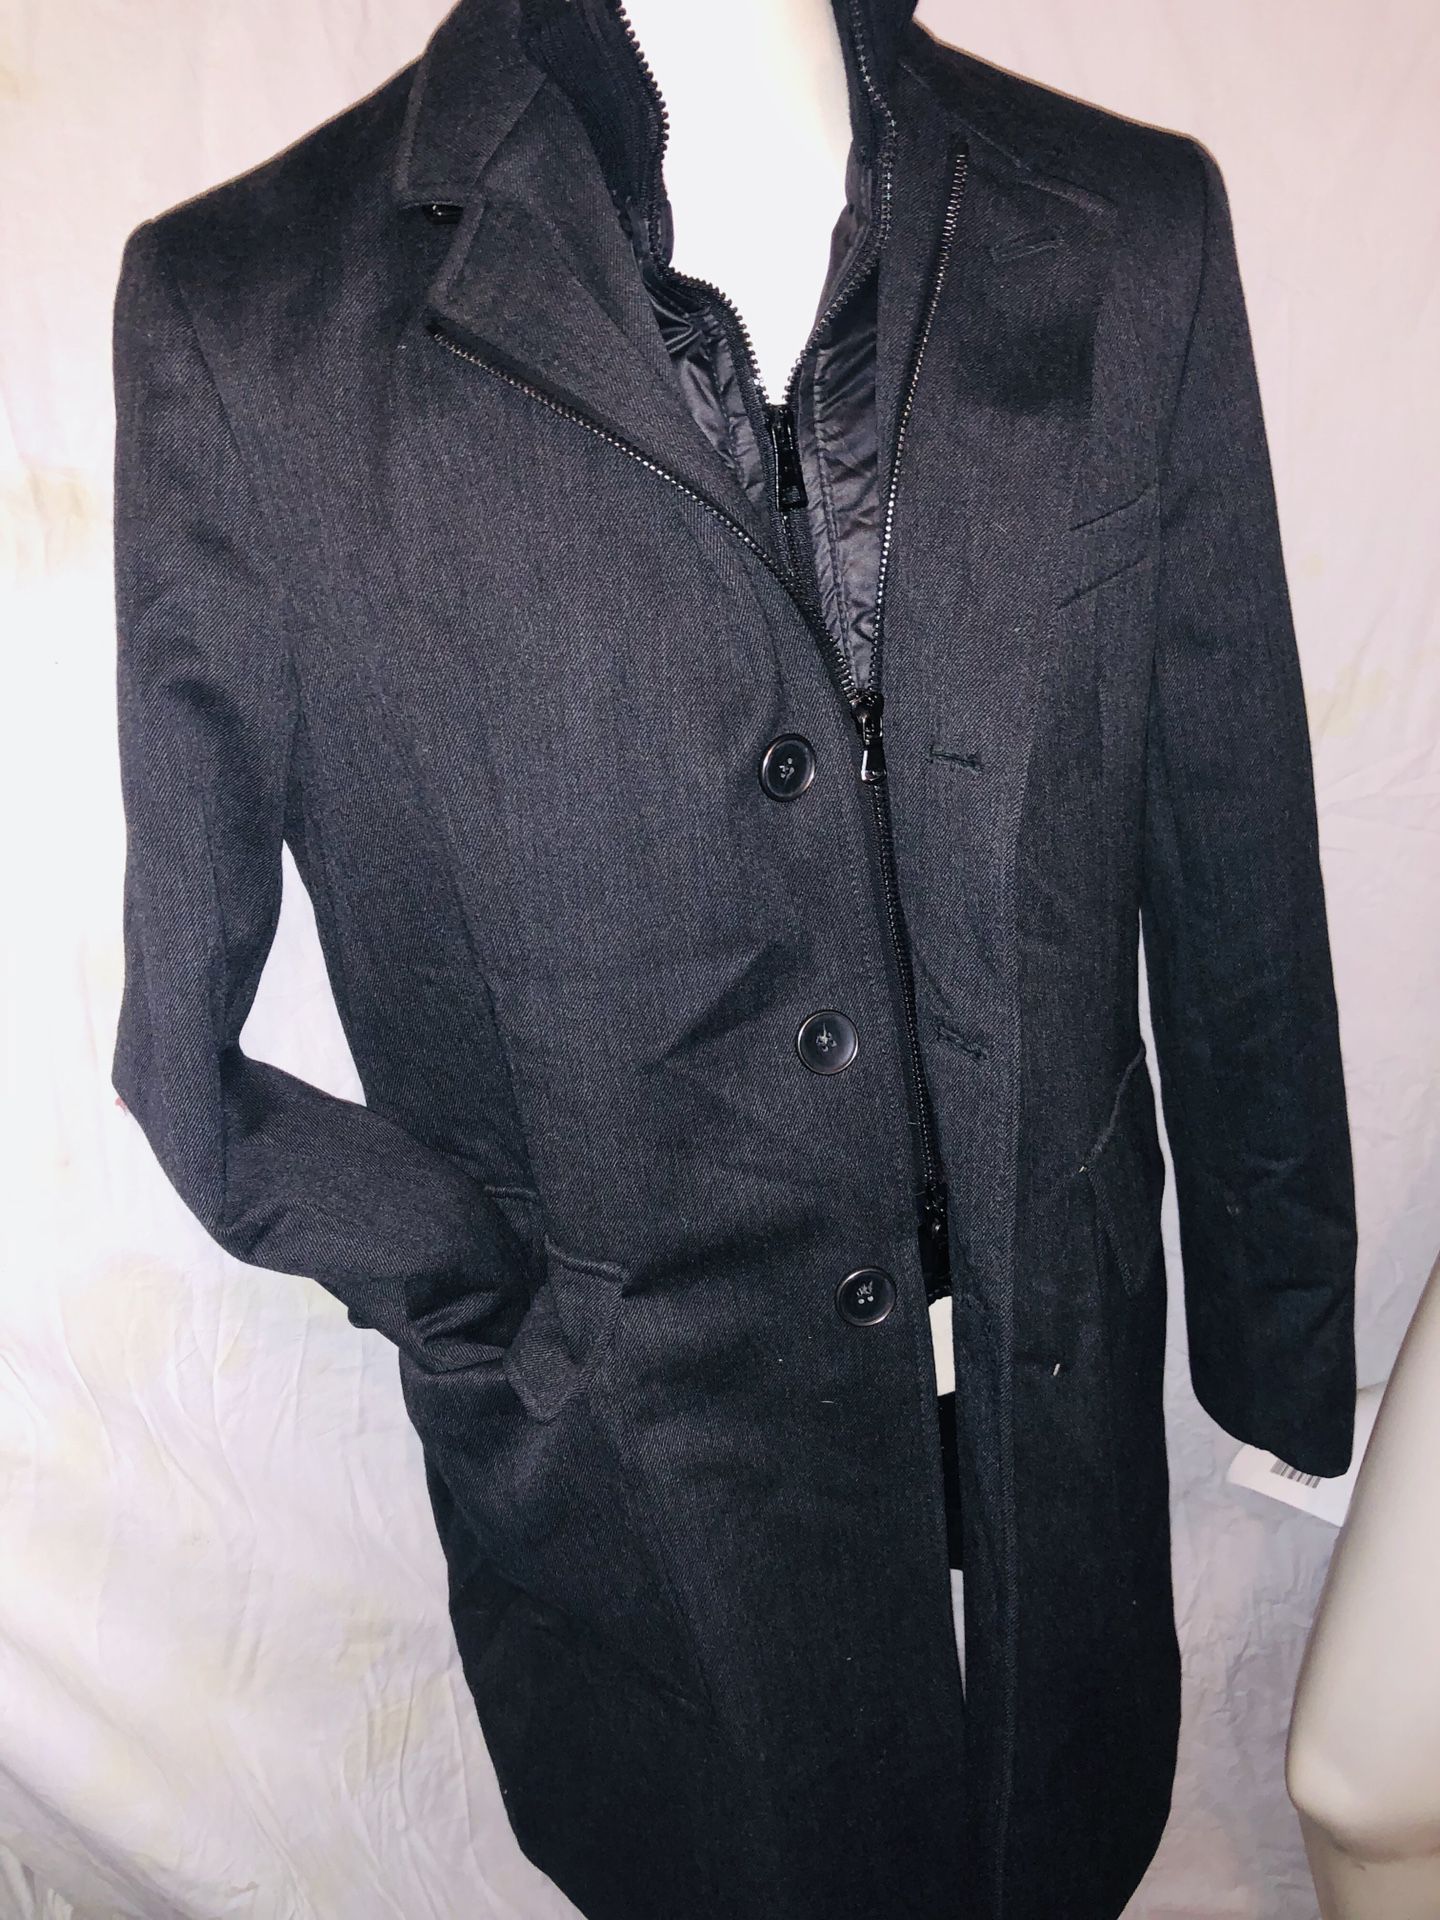 Men’s Bernini by Rienzi jacket size L